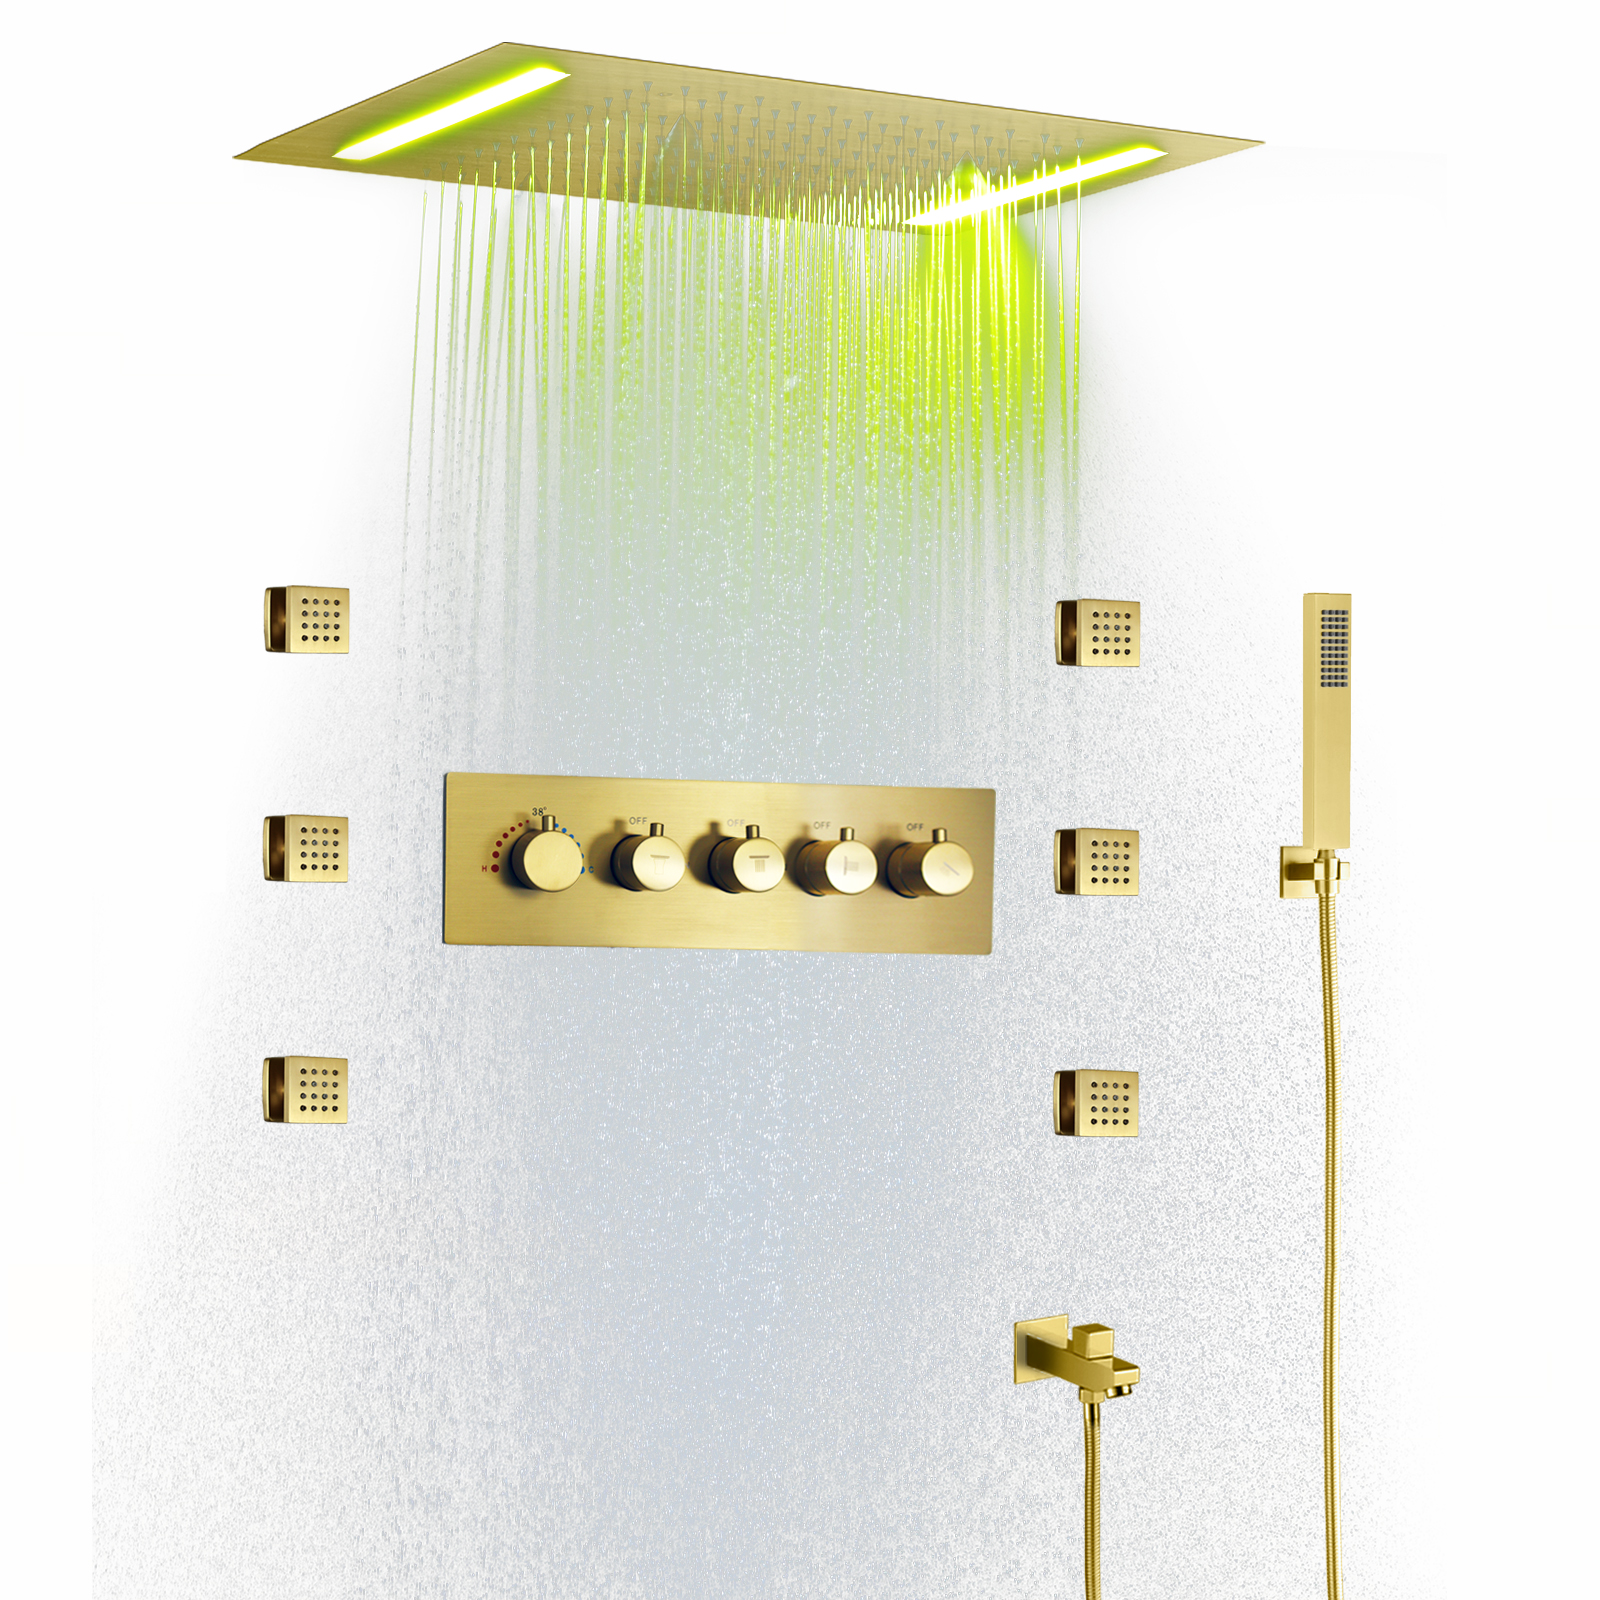 20x14 بوصة المخفية LED صغار درجة حرارة المطر Hennoise صمام درجة الحرارة دش الجانب Spitter Switchter سبا أدوات دش